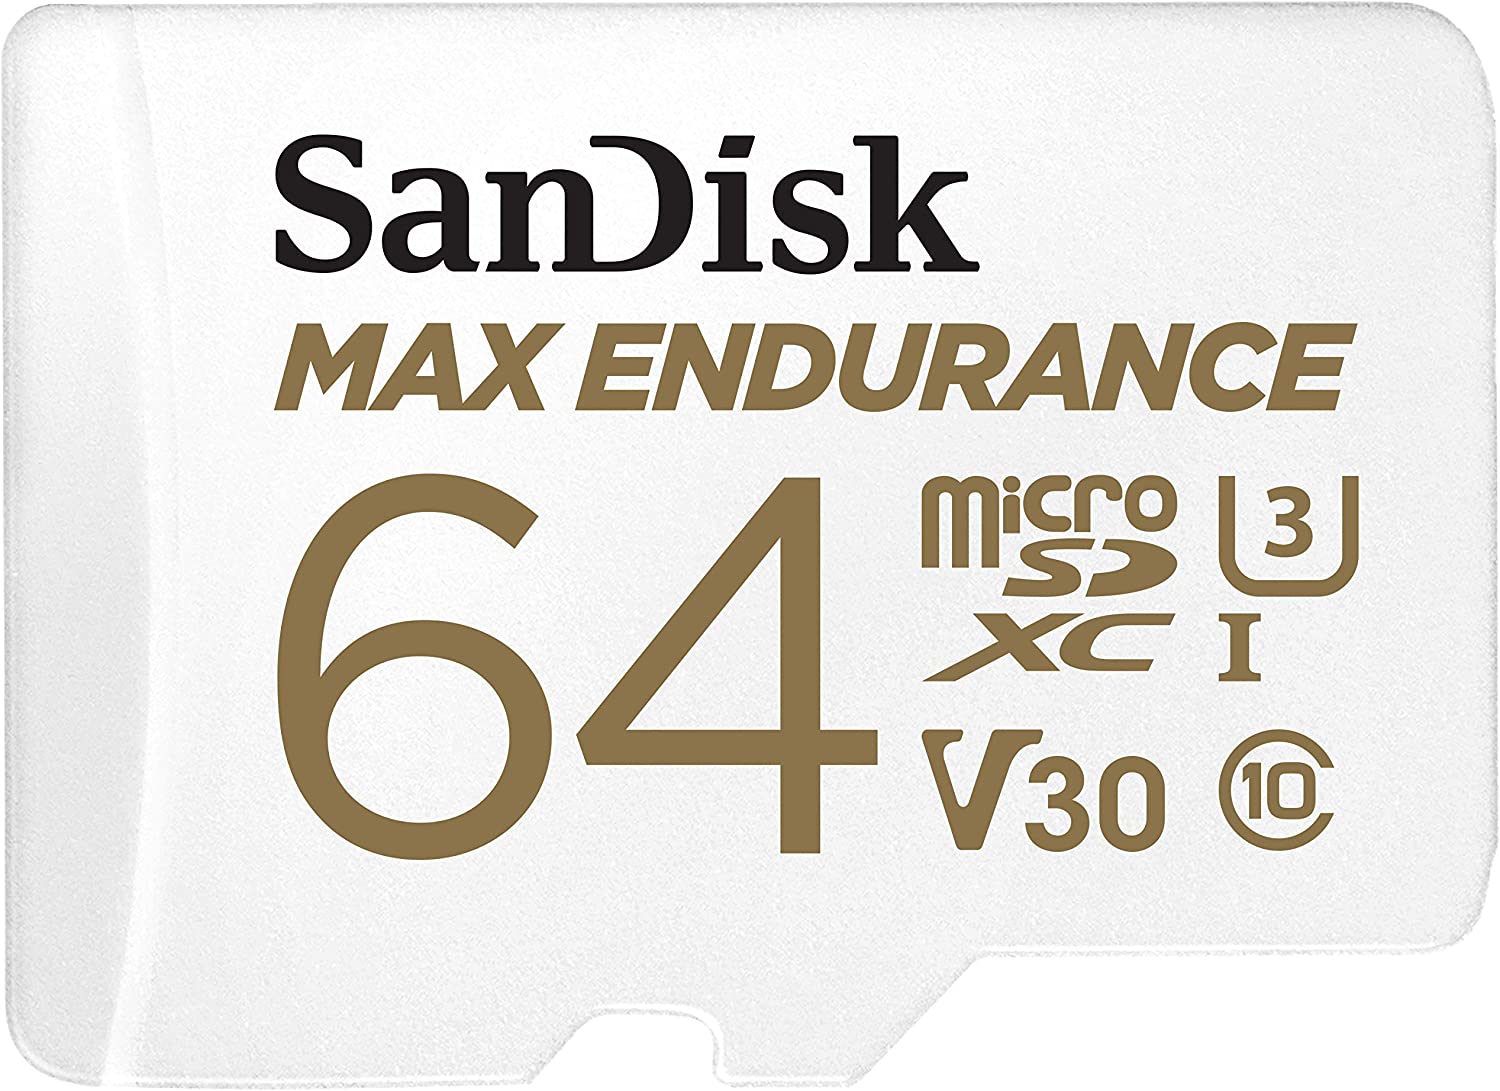 Sandisk Max Endurance microsd class 10 64 GB Memory cards